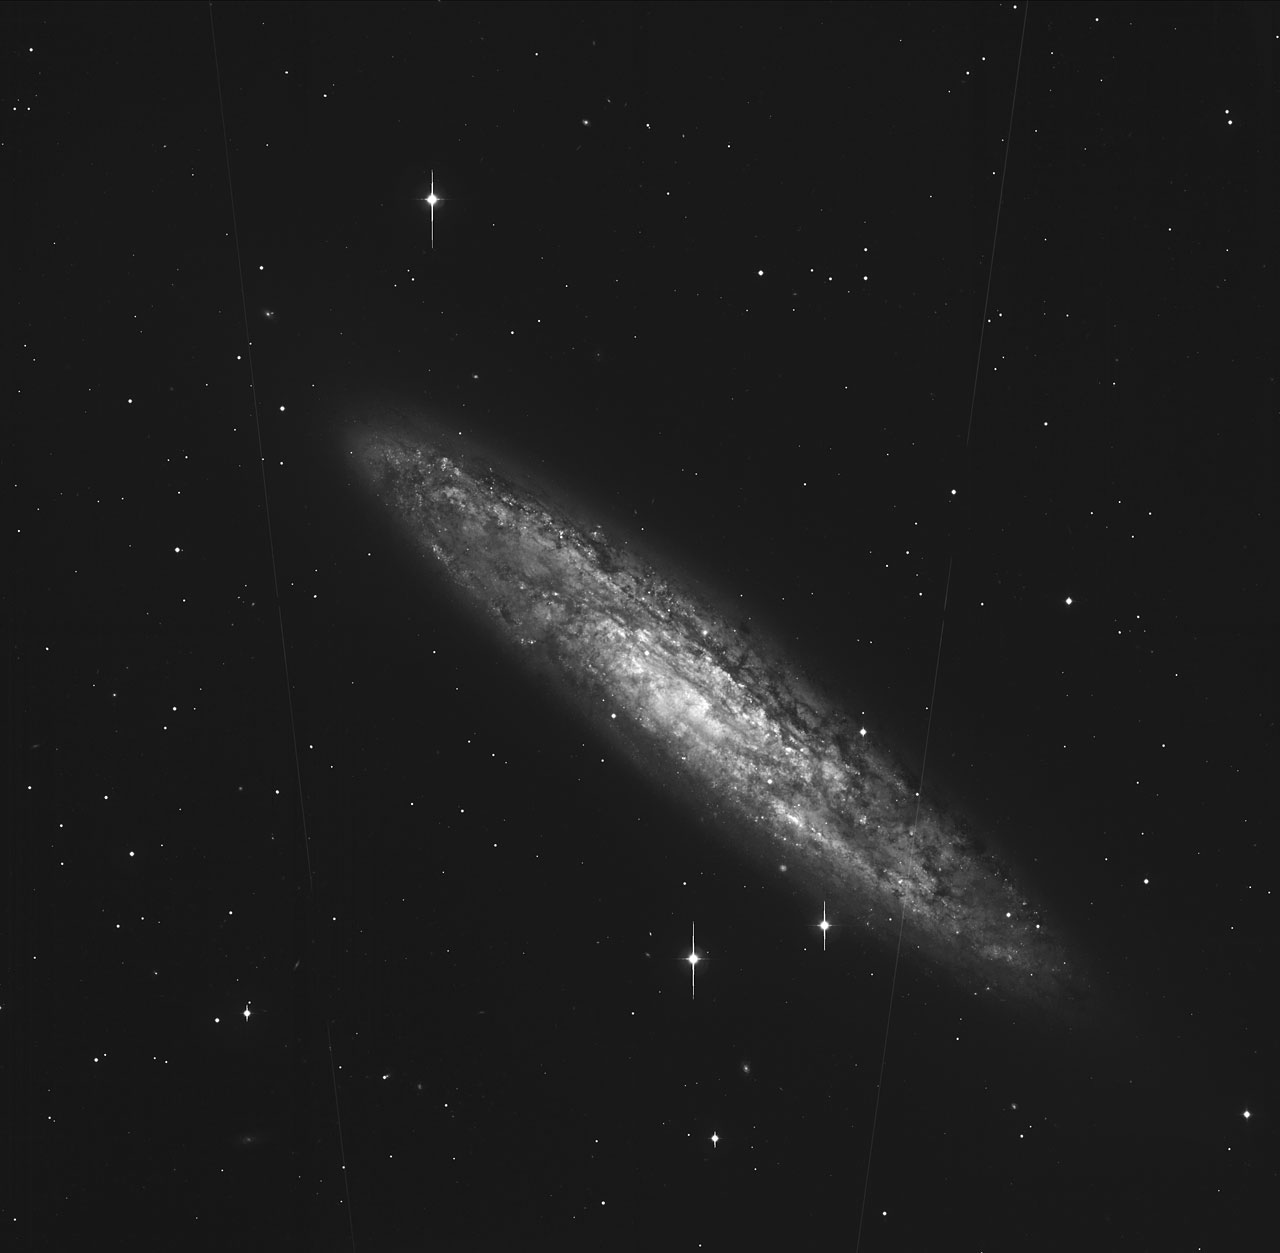 Galaxy NGC 253 Sculptor